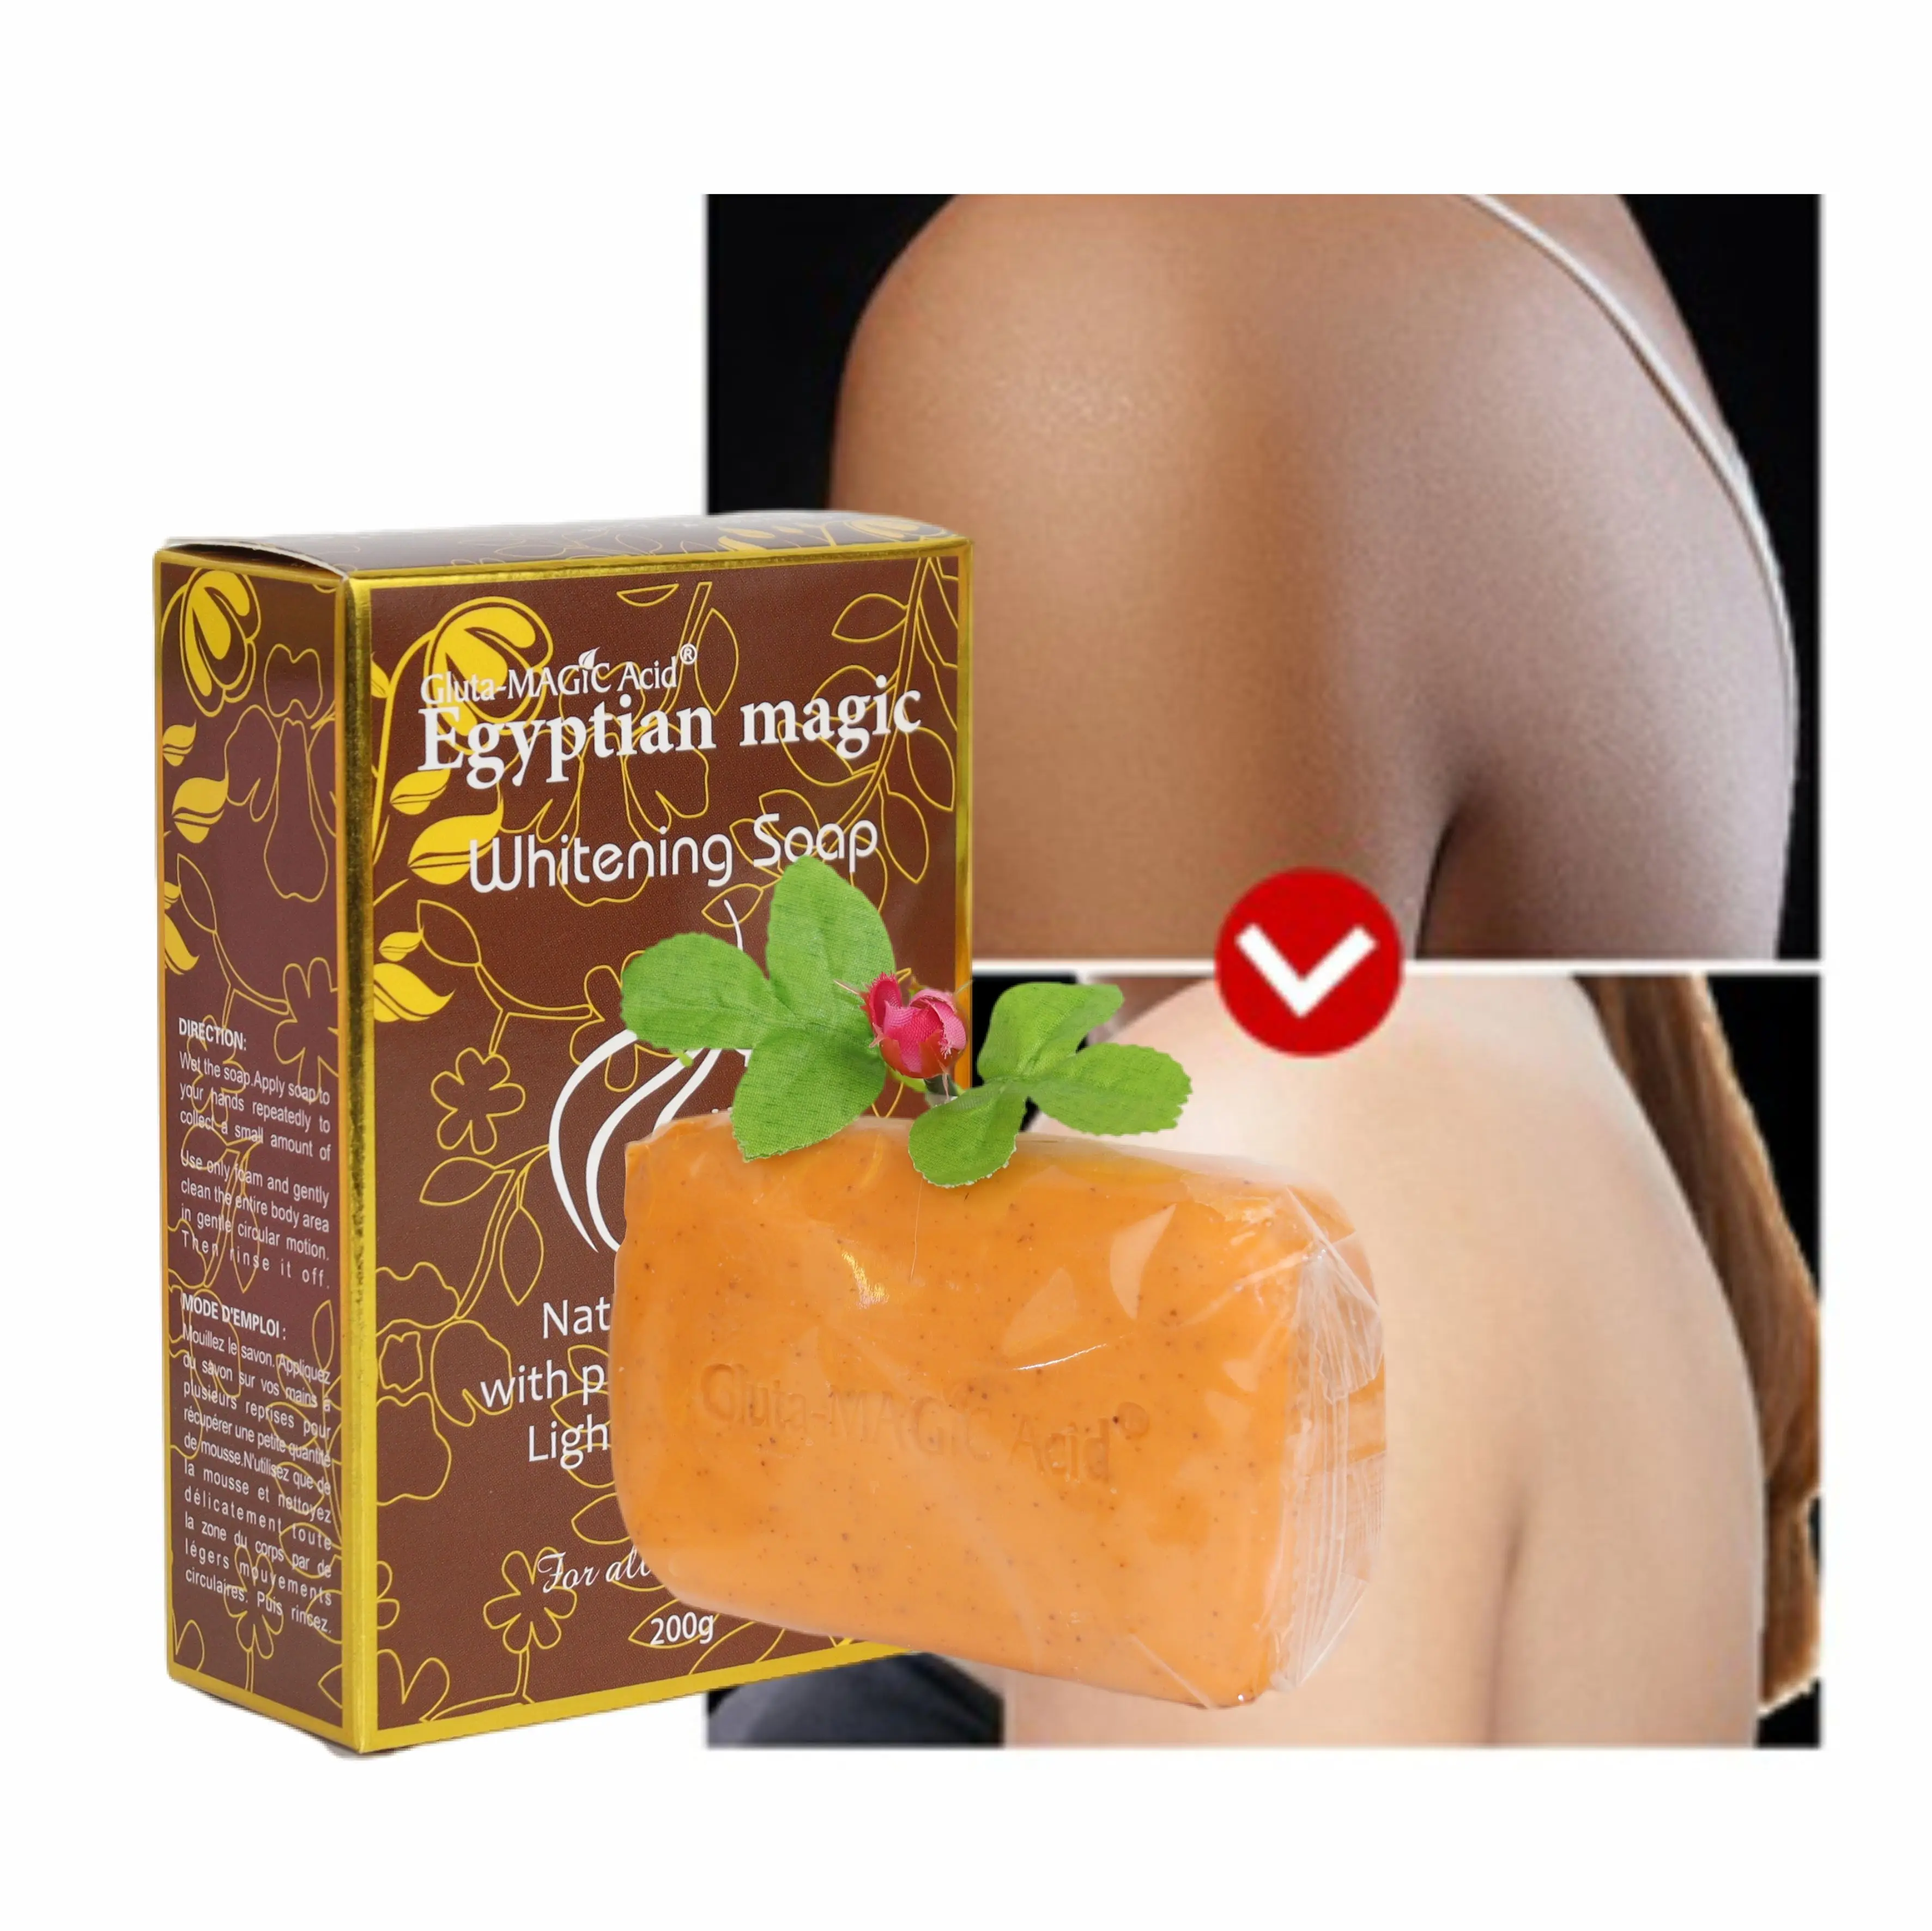 

New Whitening Soap Packing Fashion Nature Secret Magic Pure Argan Oil Extract Body Lightening Vitamin Soap, Orange